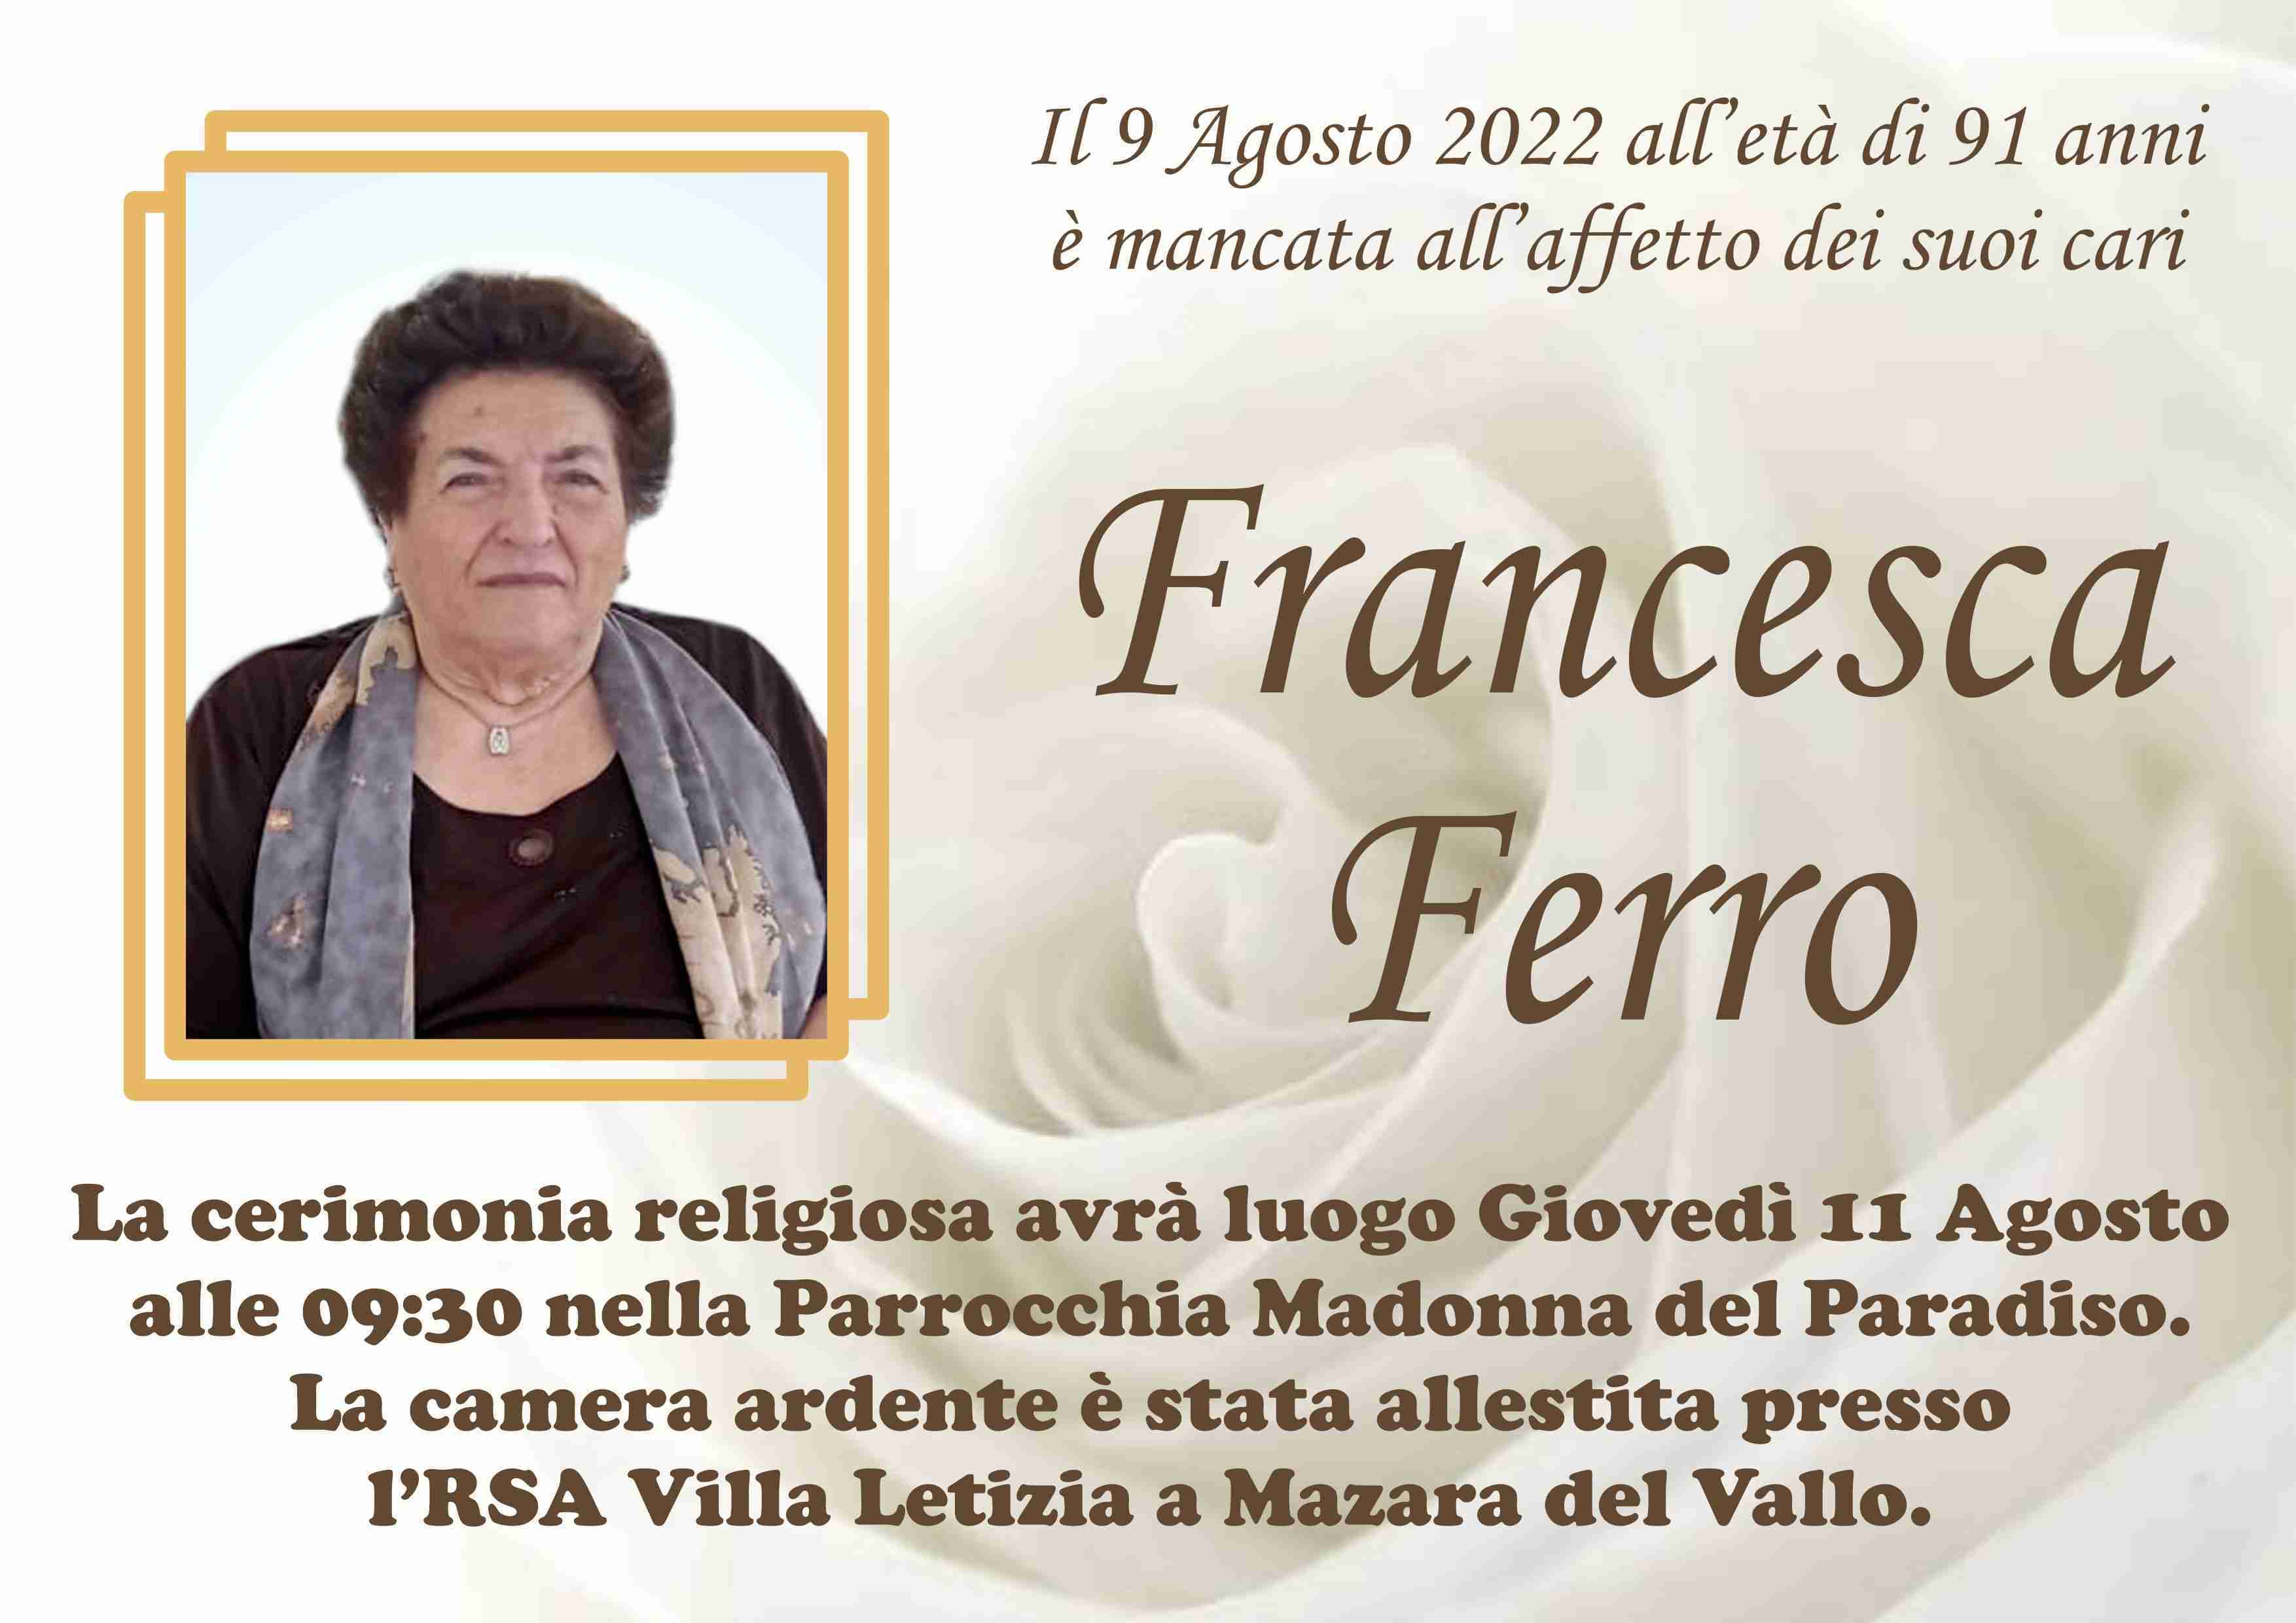 Francesca Ferro